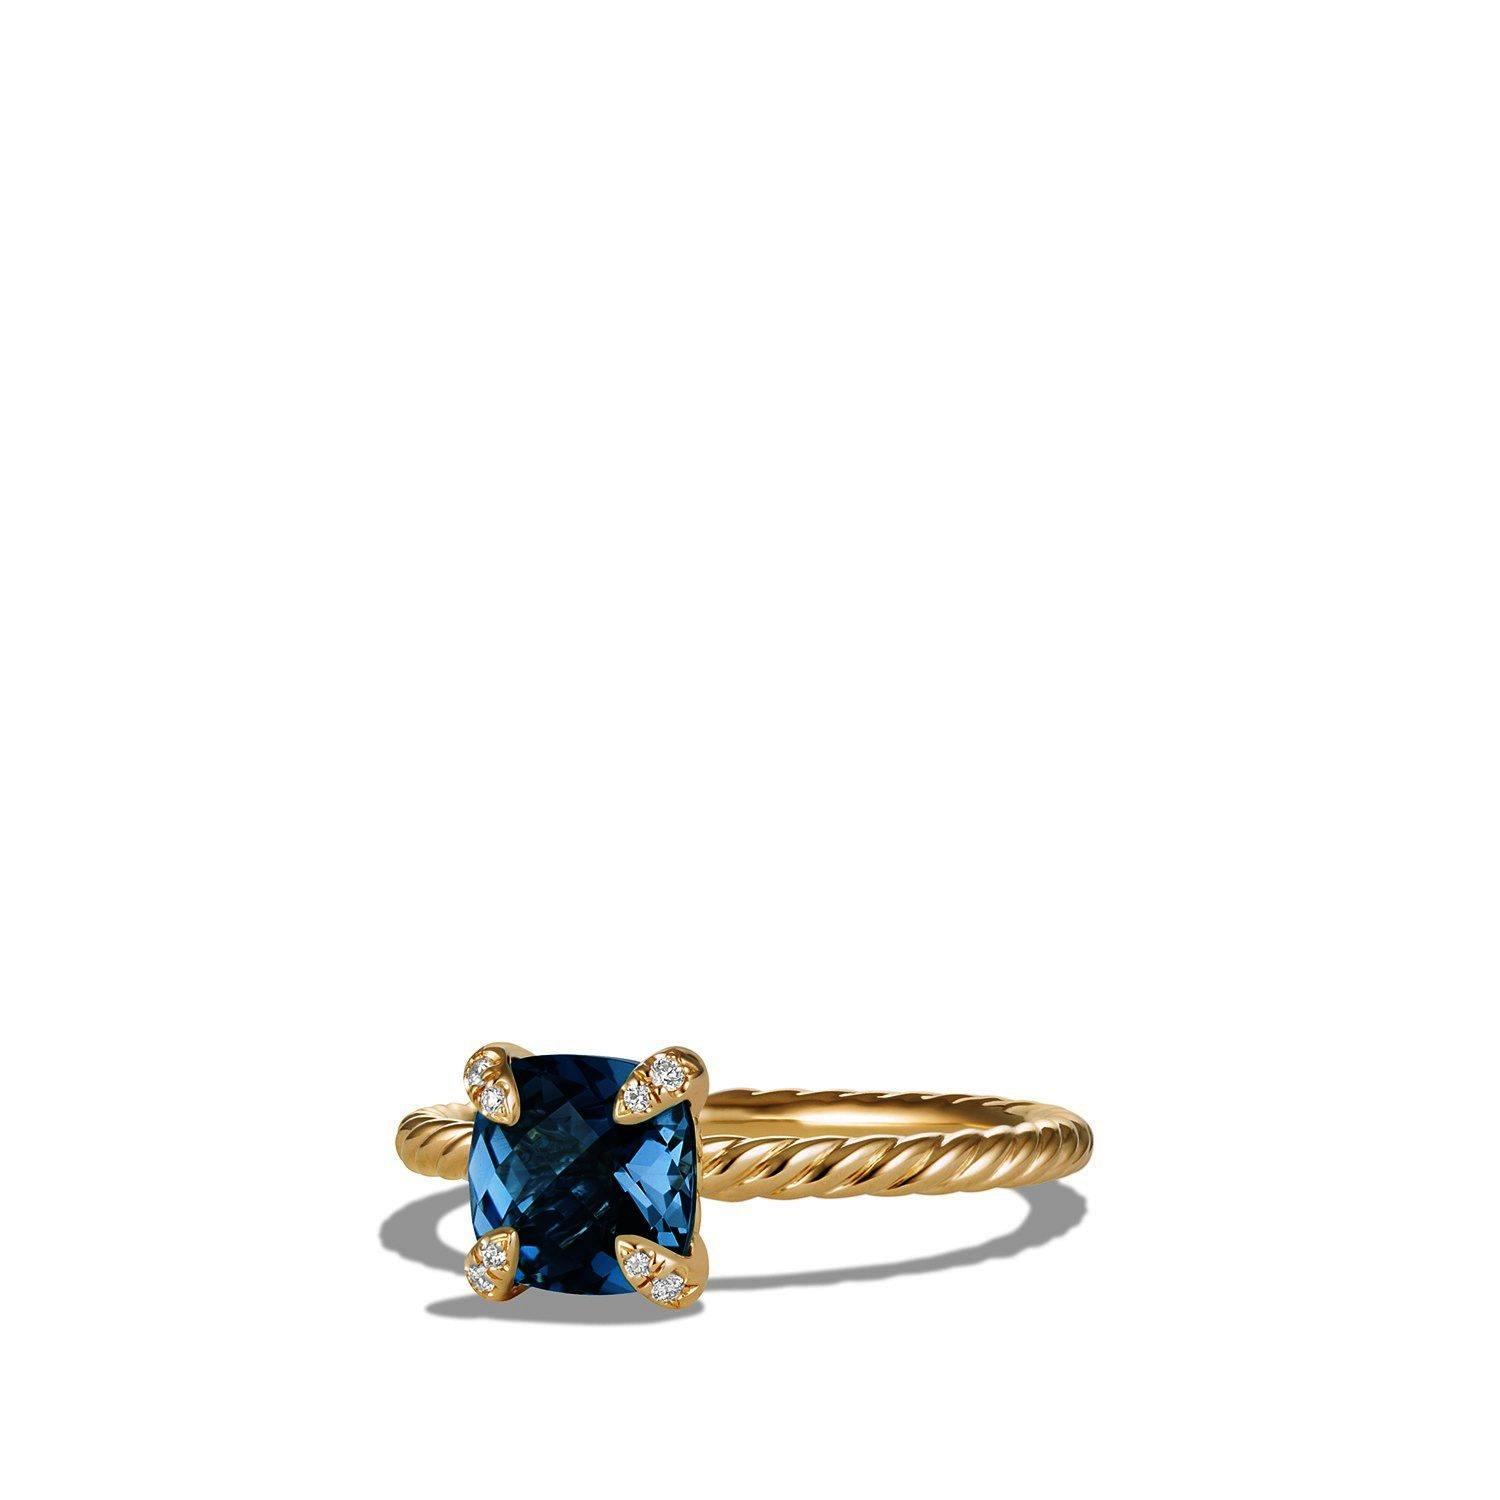 David Yurman Chatelaine Ring with Hampton Blue Topaz and Diamonds in 18k Yellow Gold, size 6